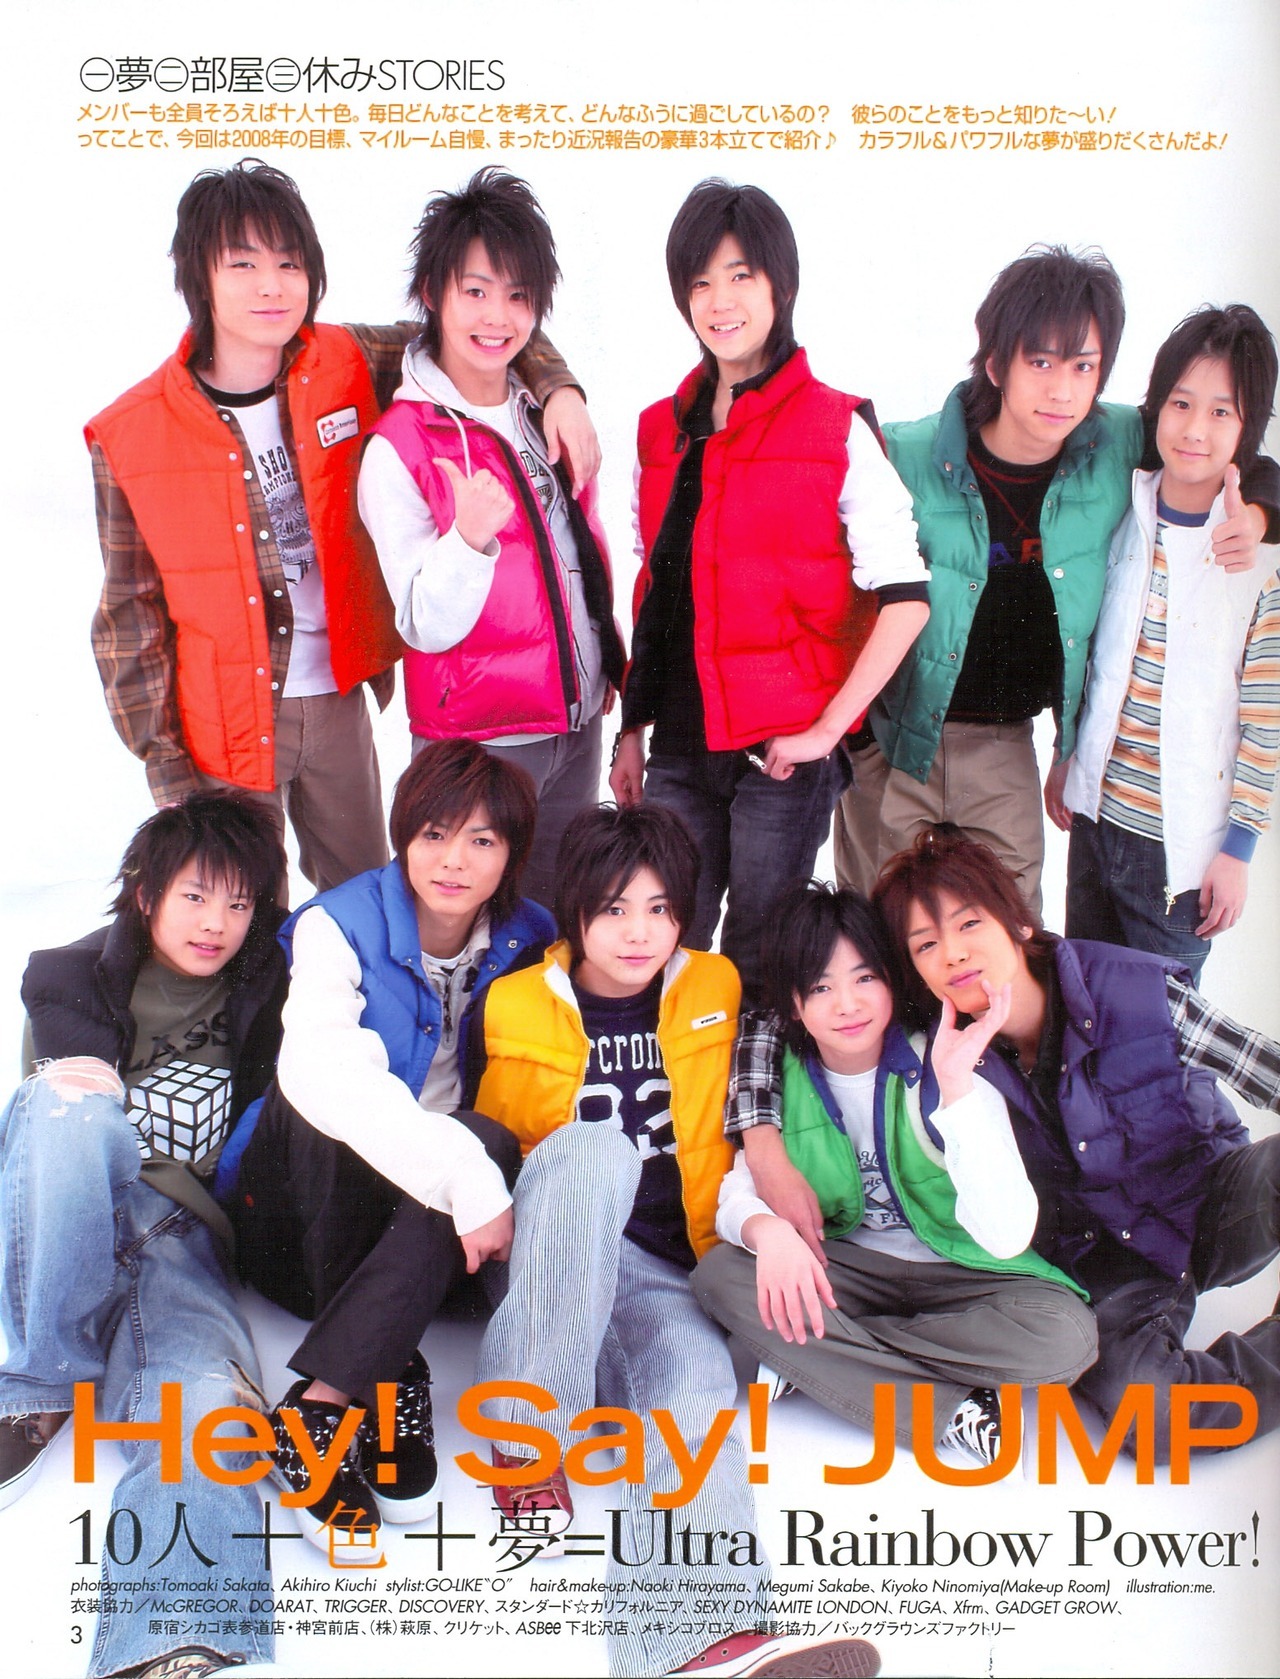 Hey Say Jump Scrapbook Hey Say Jump Duet February 08